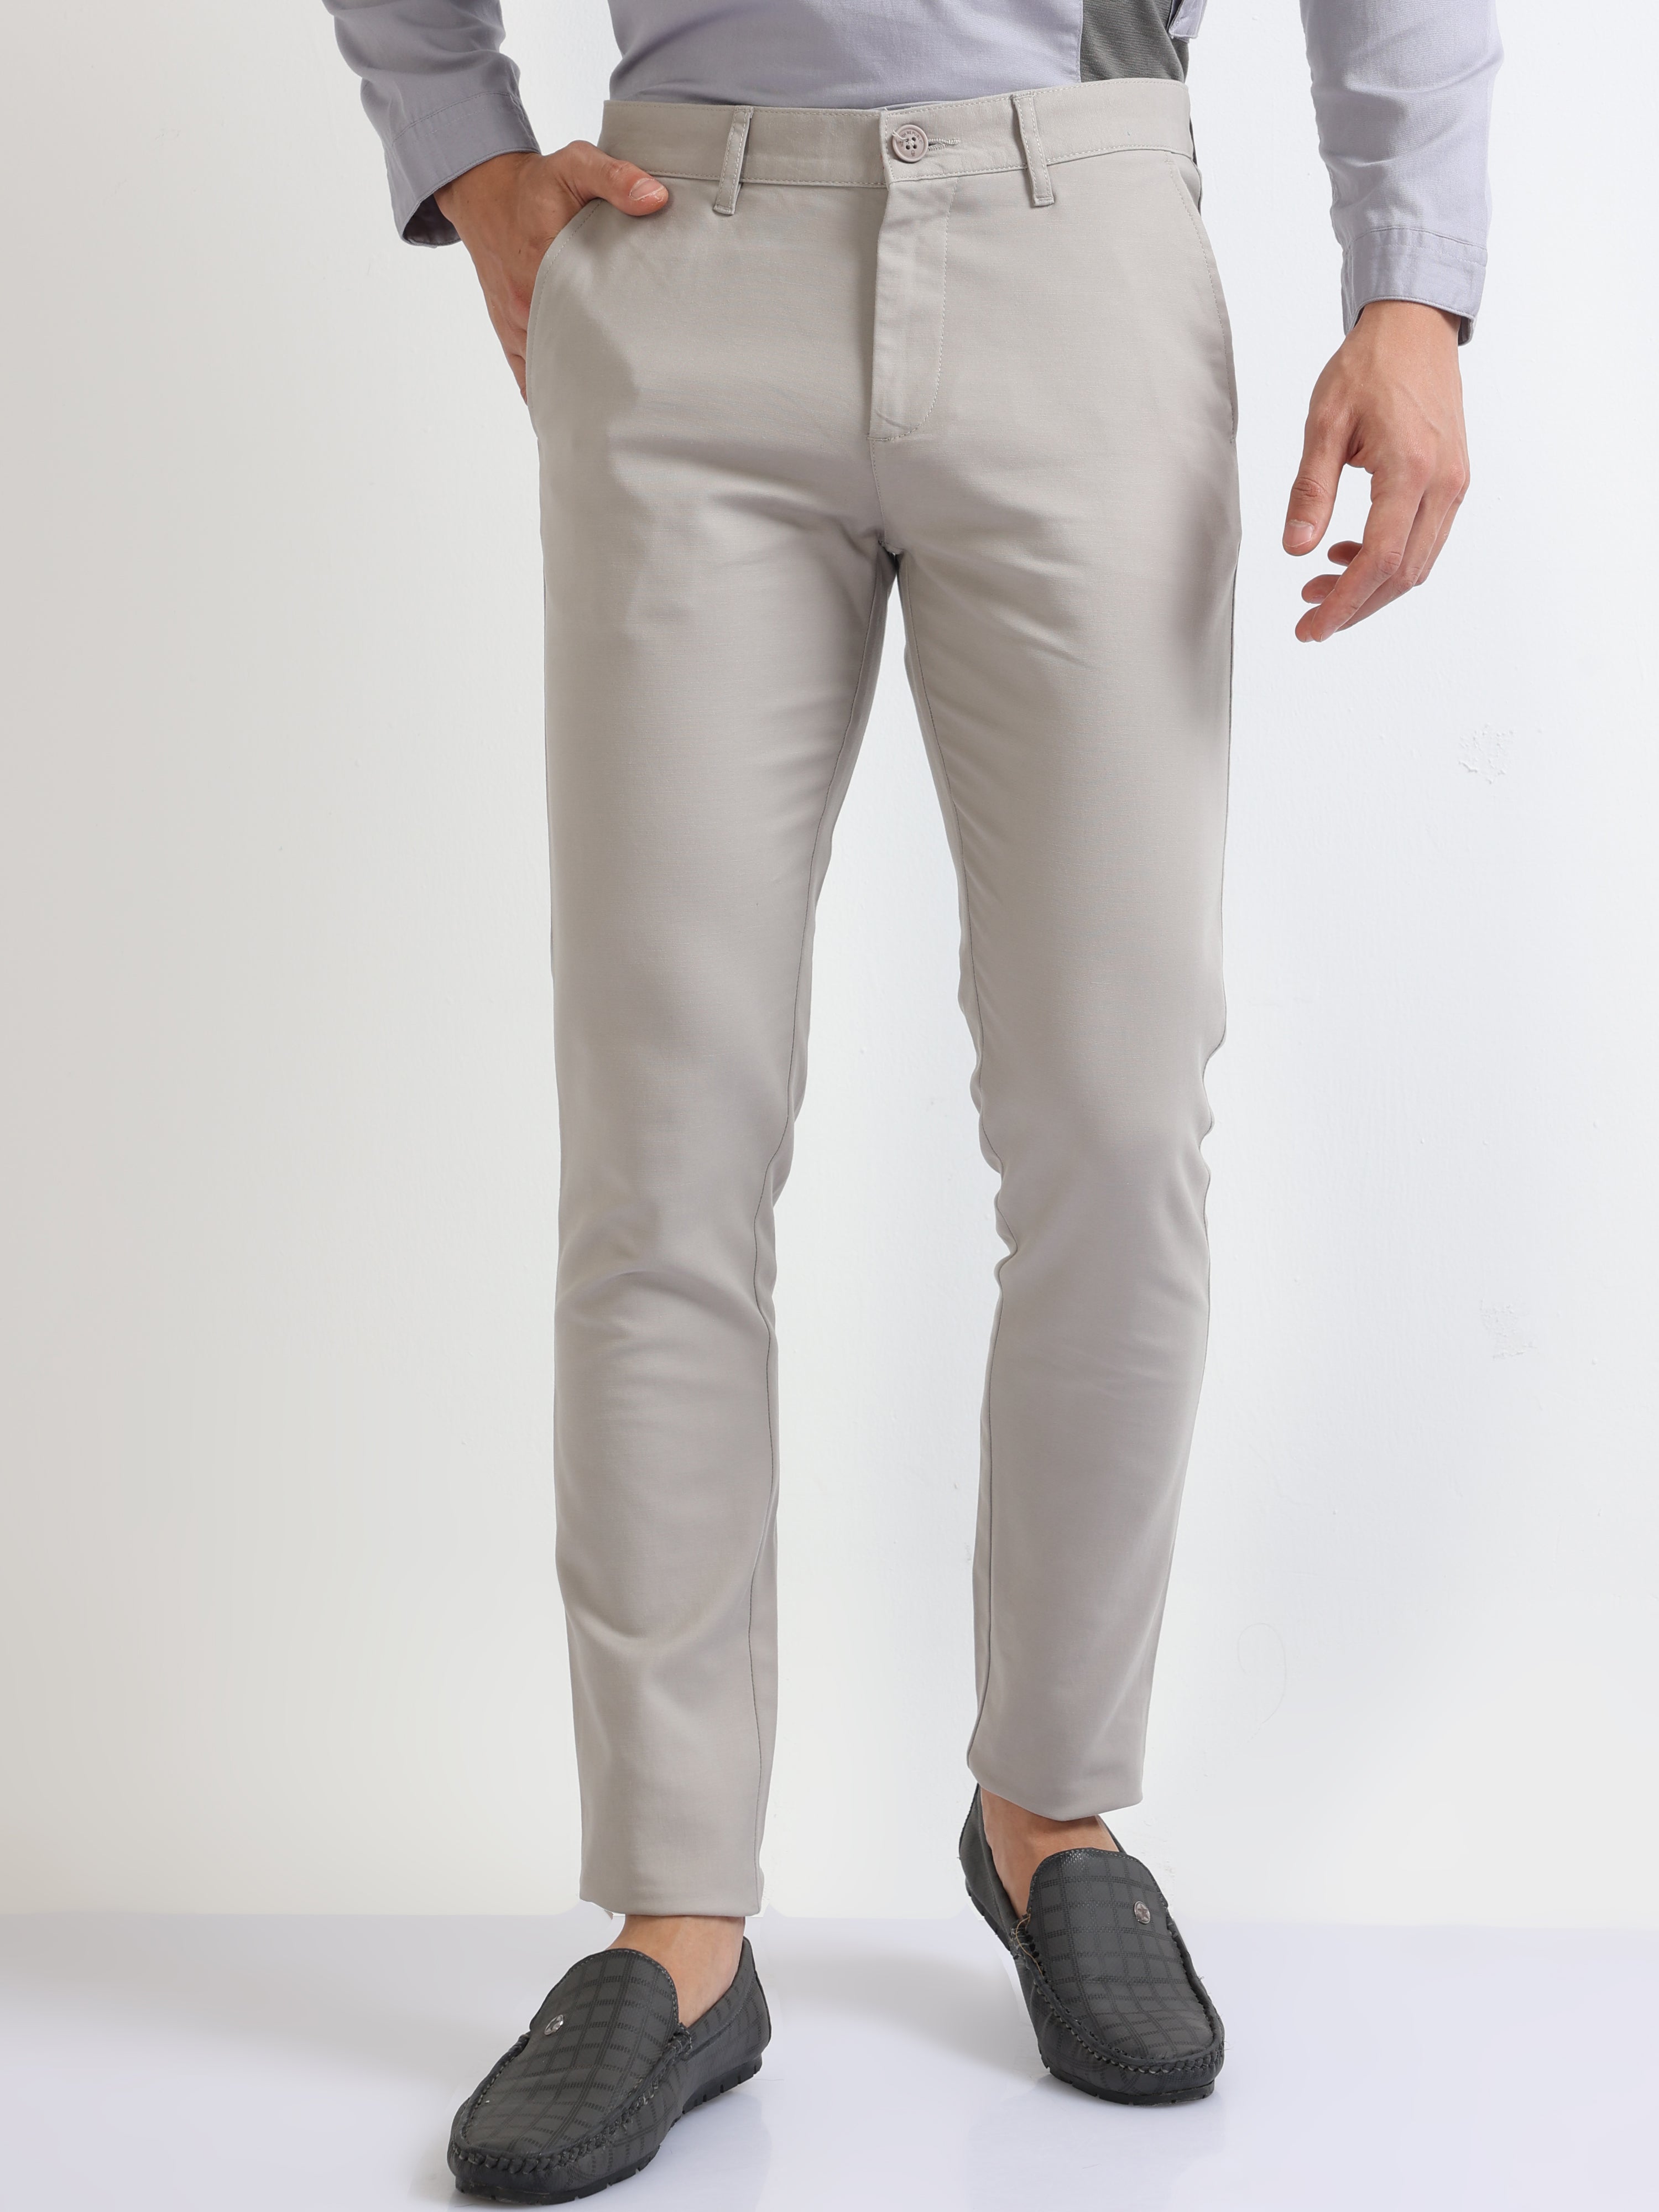 Irish linen-cotton chino in 484 fit | Moda masculina 2018, Camisa branca de  manga curta, Moda para homens